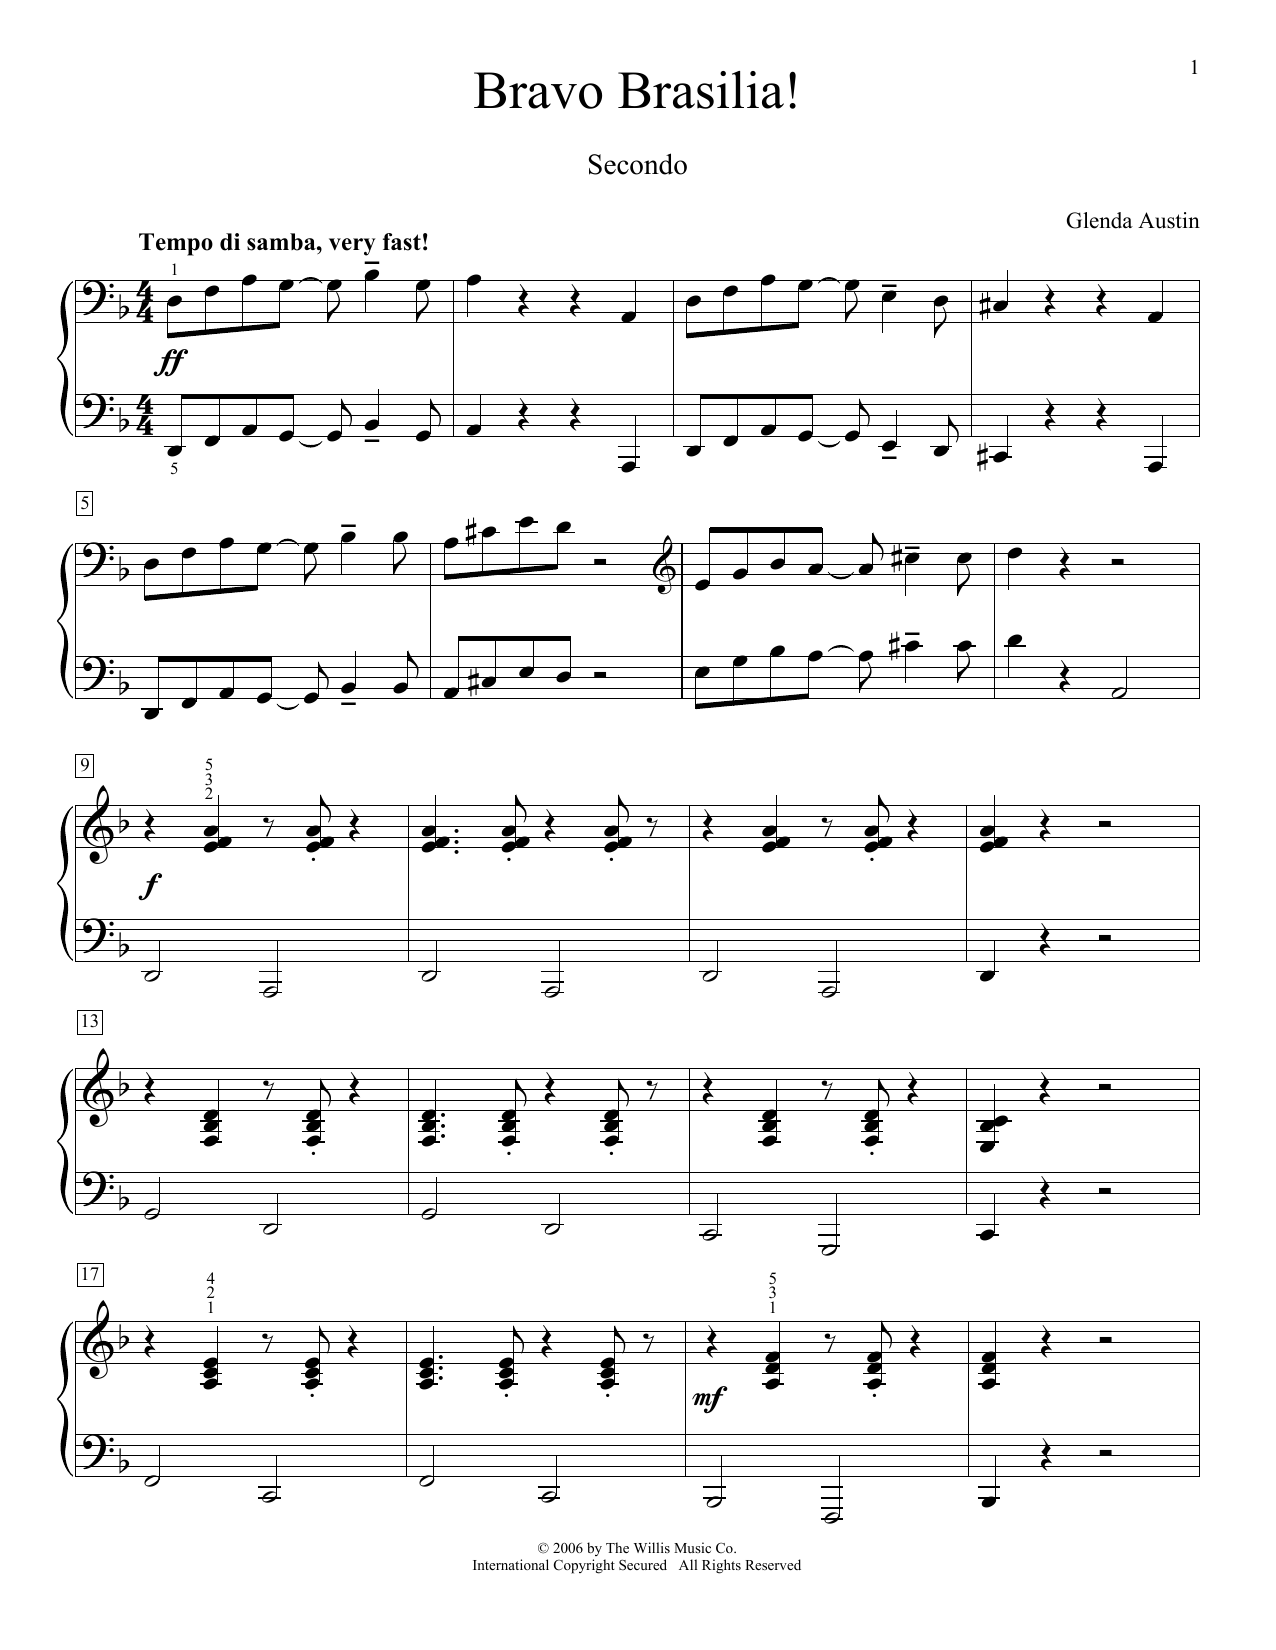 Glenda Austin Bravo Brasilia! Sheet Music Notes & Chords for Piano - Download or Print PDF